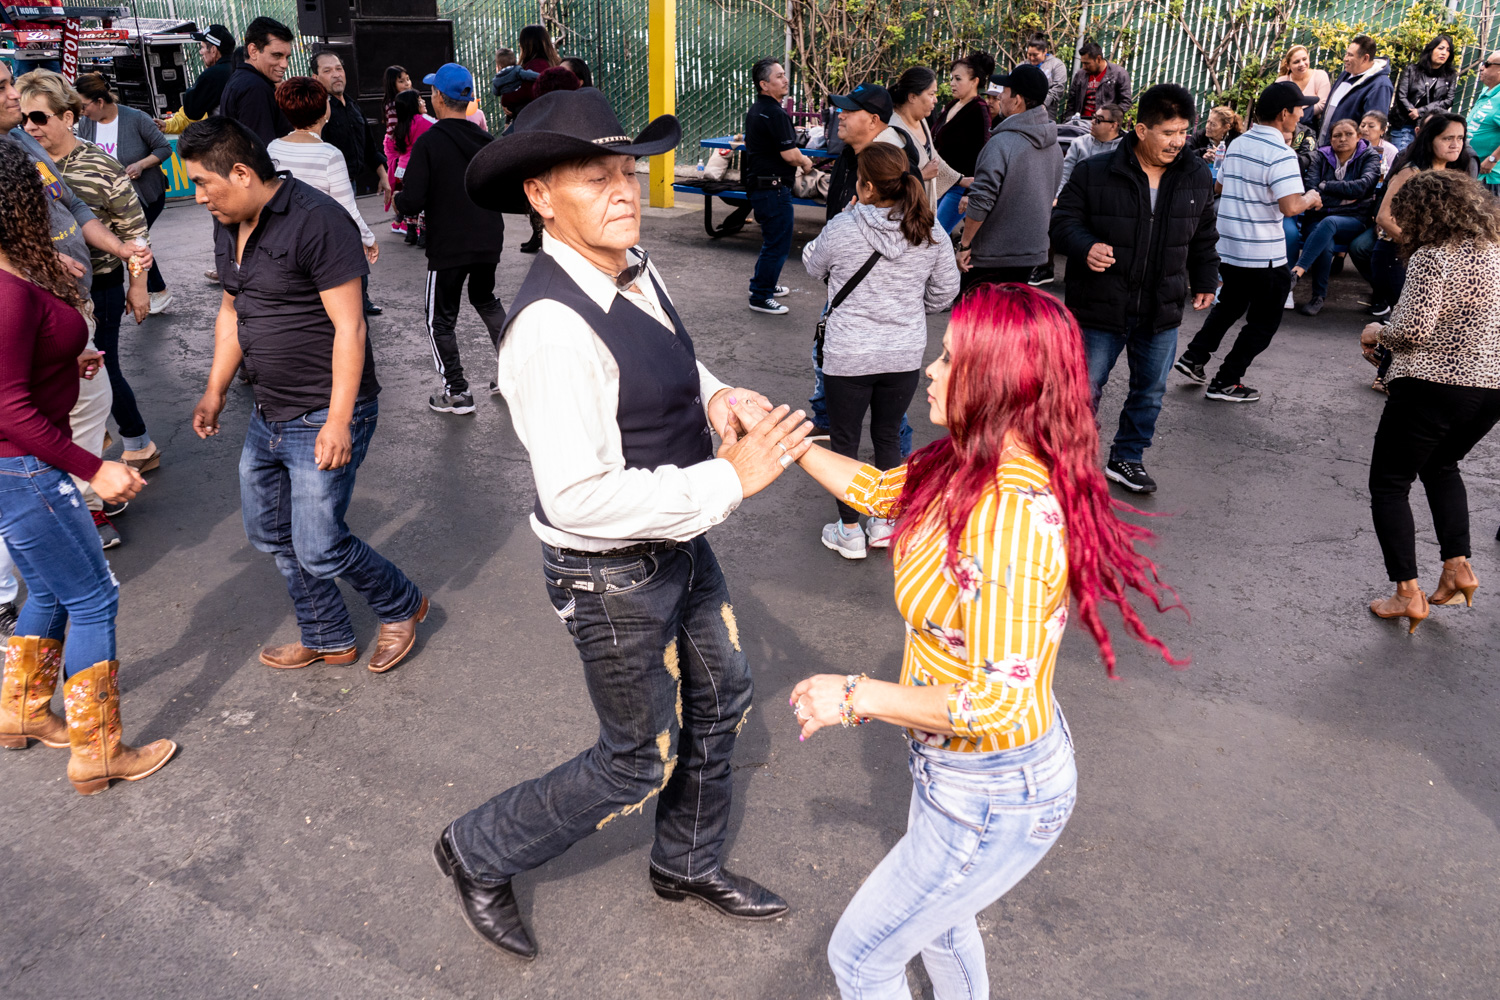 March 8, 2020: Dancing at the West Wind Coliseum Public Market, 5401 Coliseum Way, Oakland, California. © Camilo José Vergara